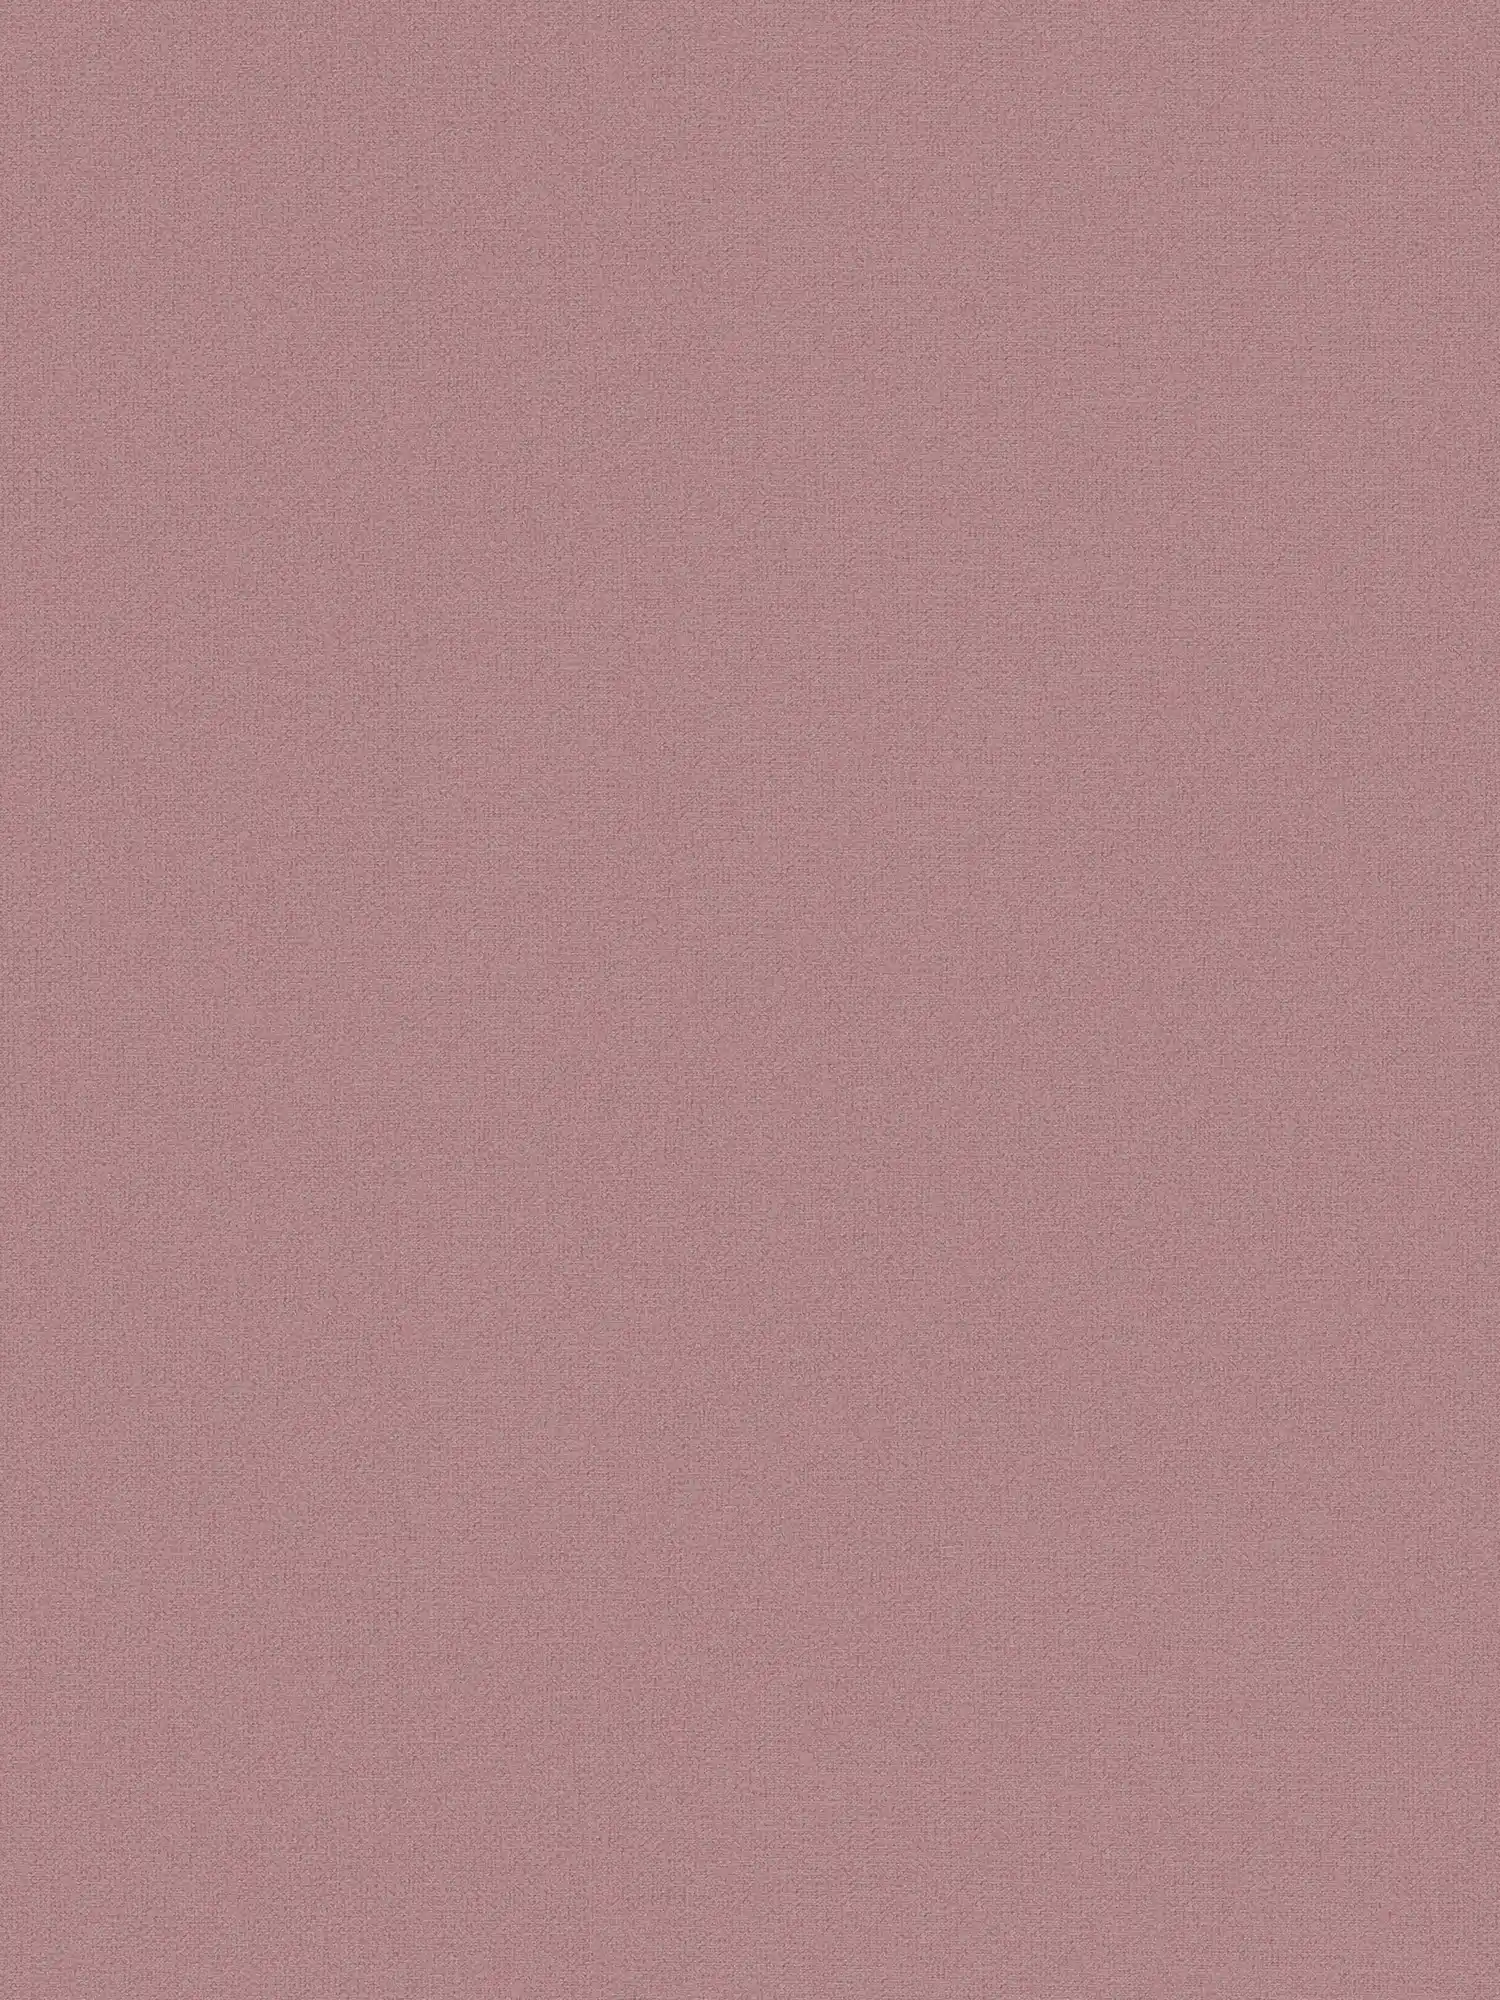 Plain non-woven wallpaper with textile look PVC-free - purple
